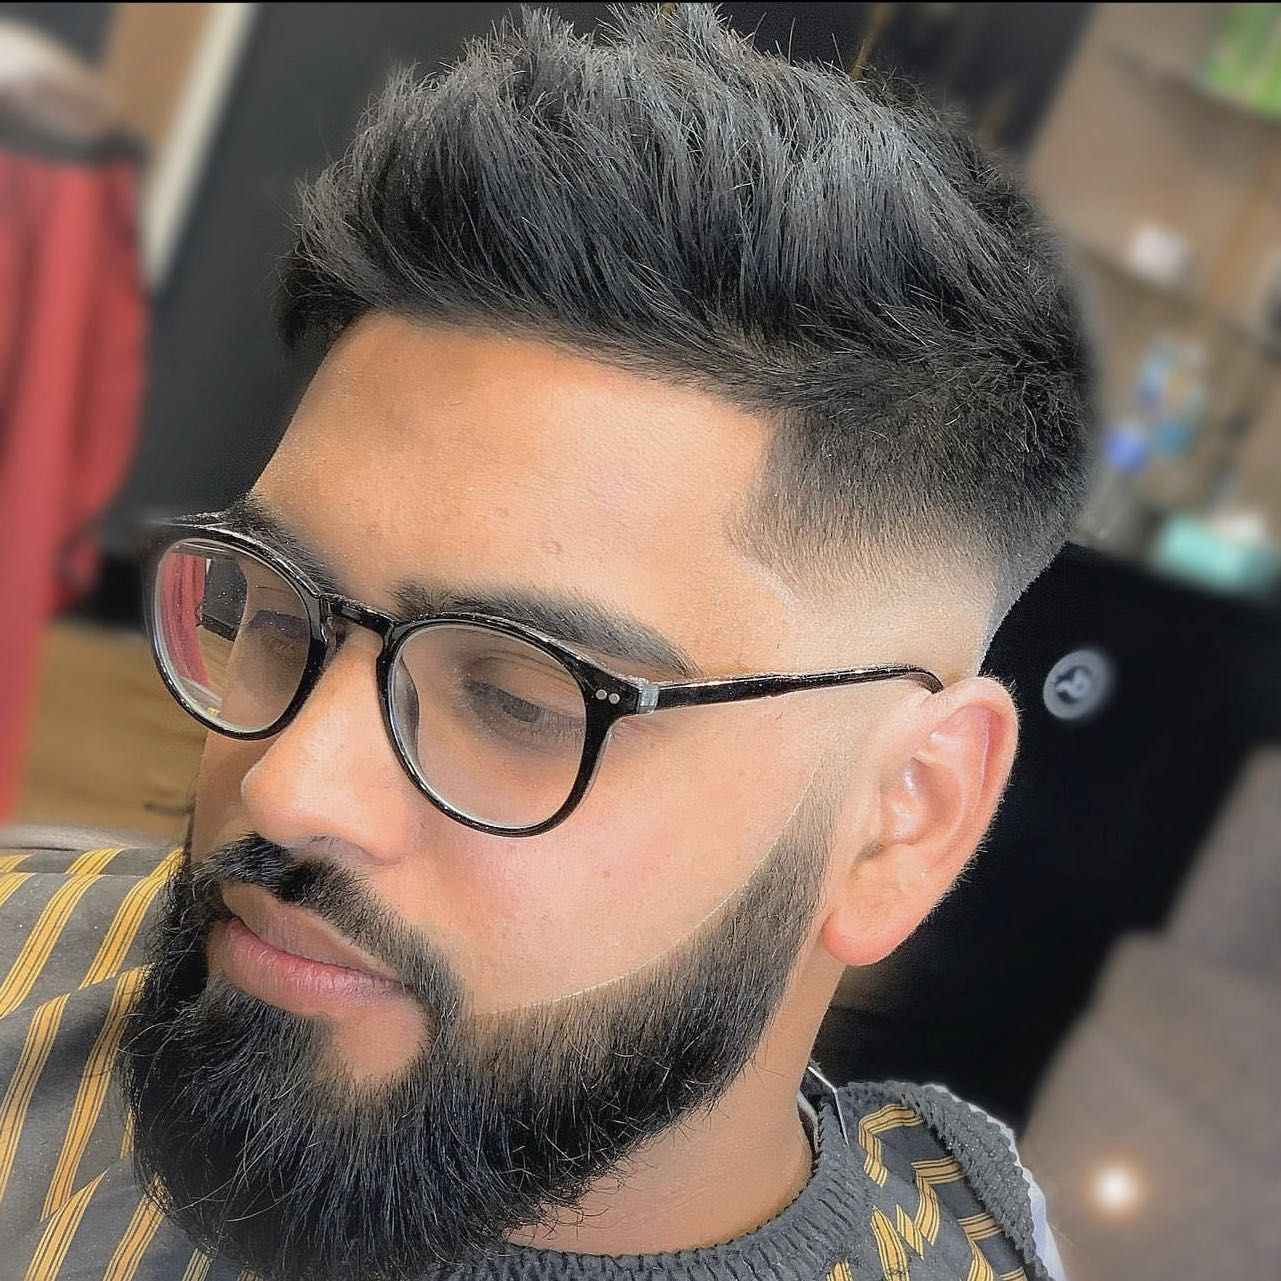 Haircuts & beard portfolio